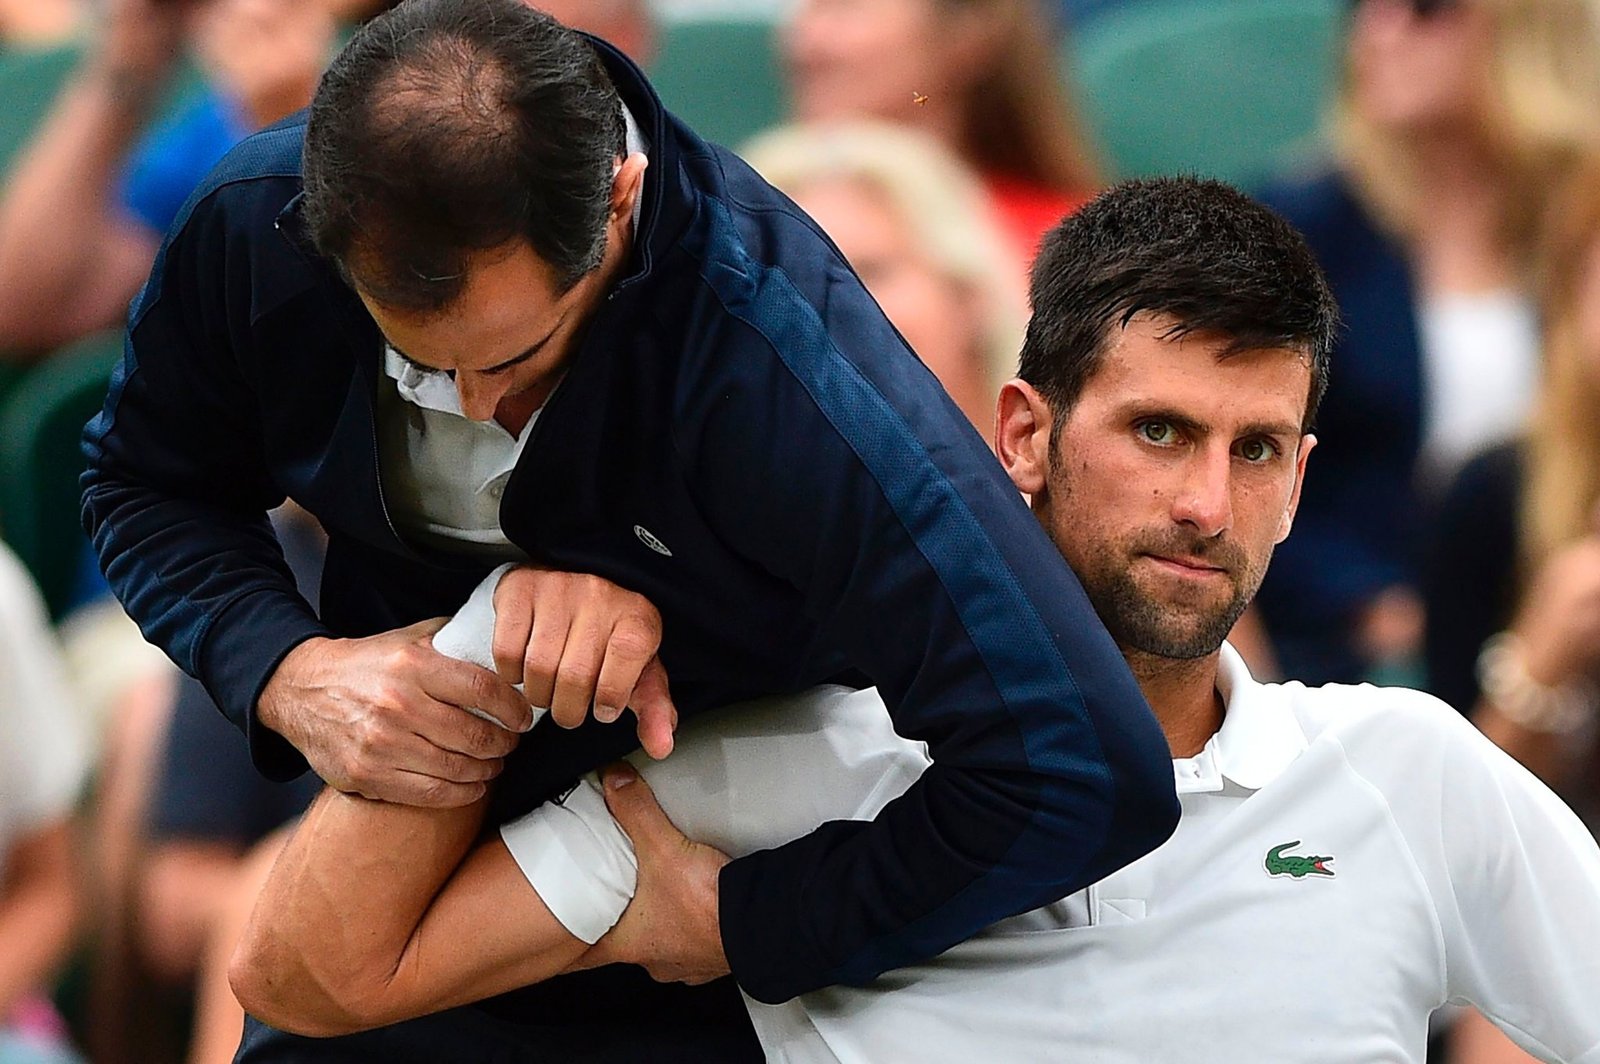 Novak Djokovic elbow